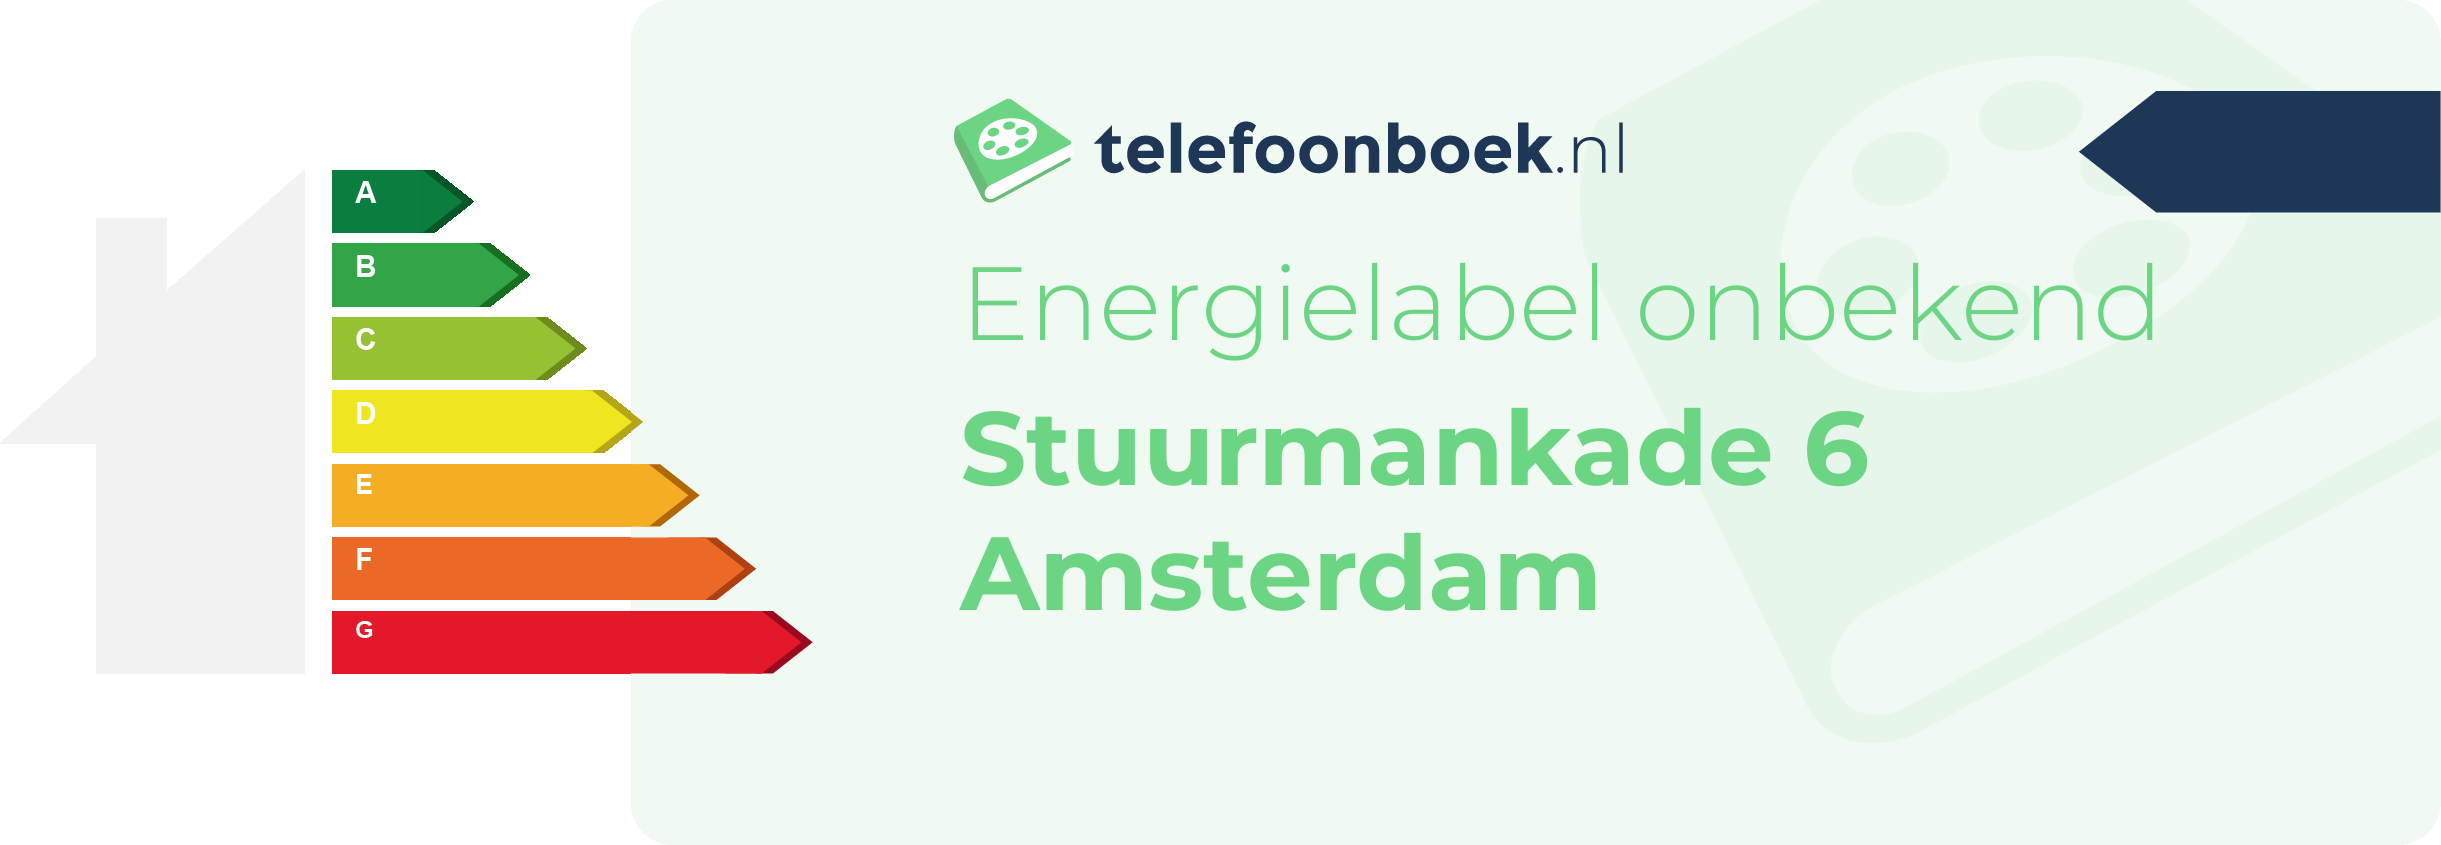 Energielabel Stuurmankade 6 Amsterdam